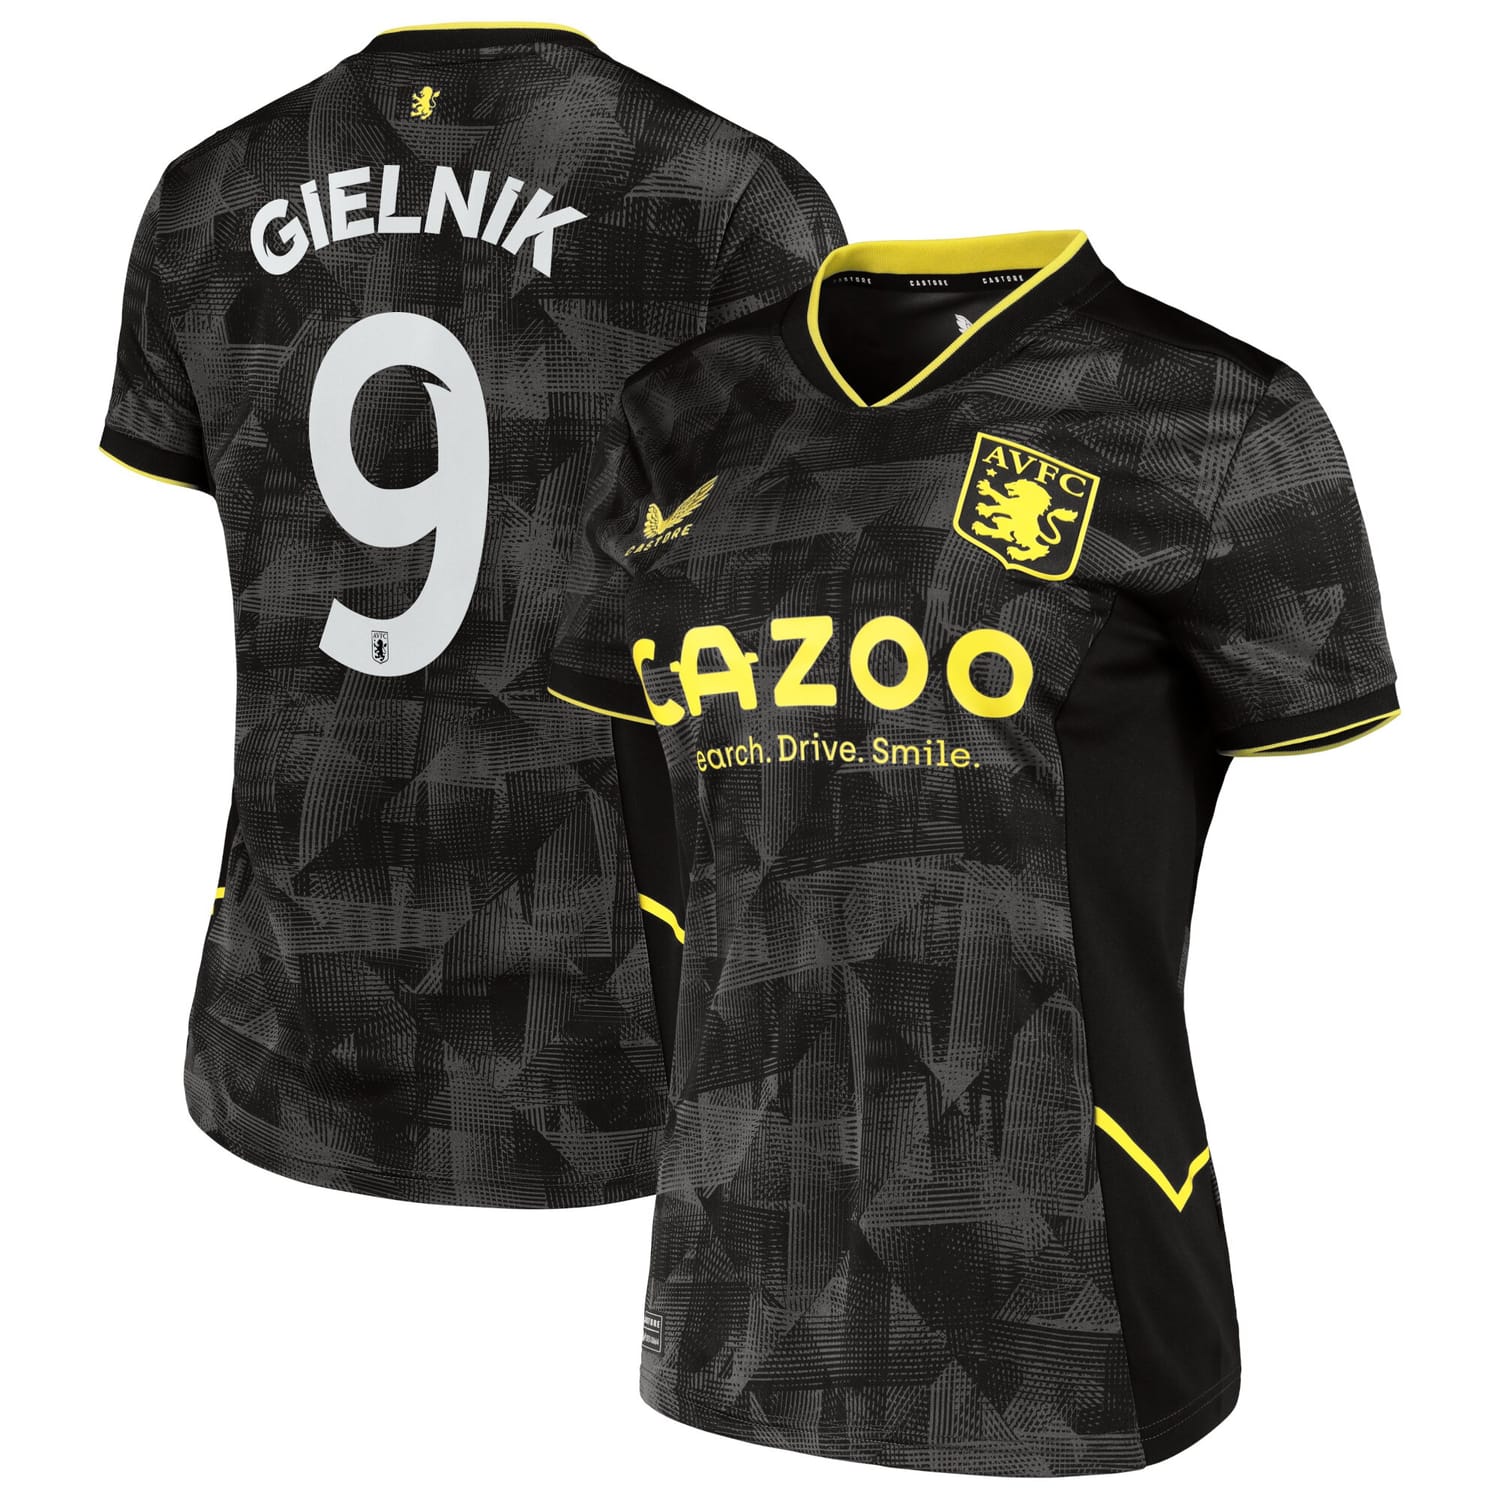 Premier League Aston Villa Third Cup Jersey Shirt 2022-23 player Emily Gielnik 9 printing for Women